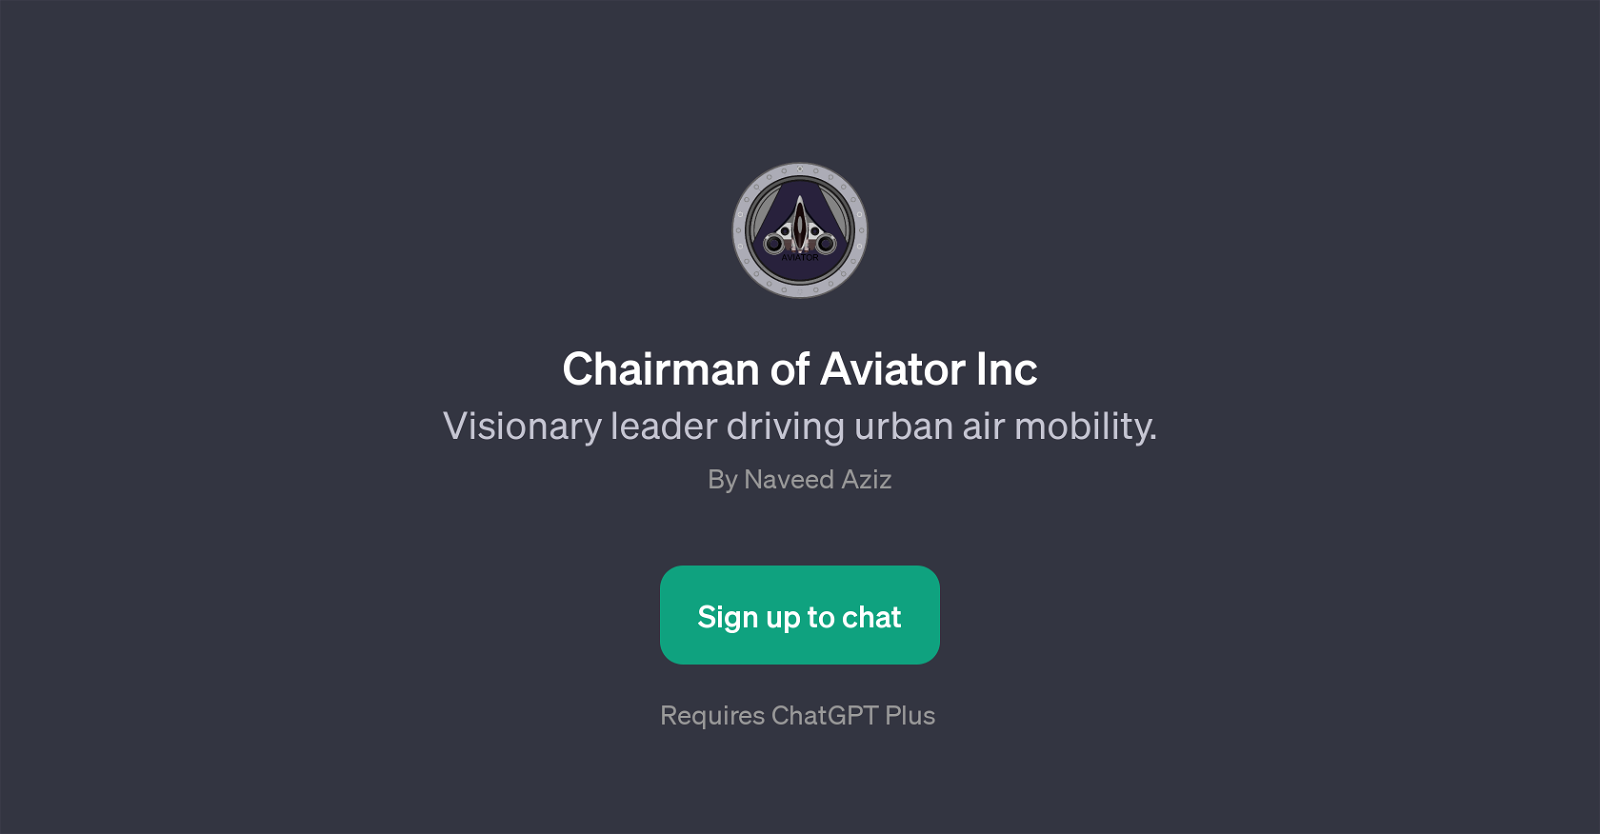 Chairman of Aviator Inc website